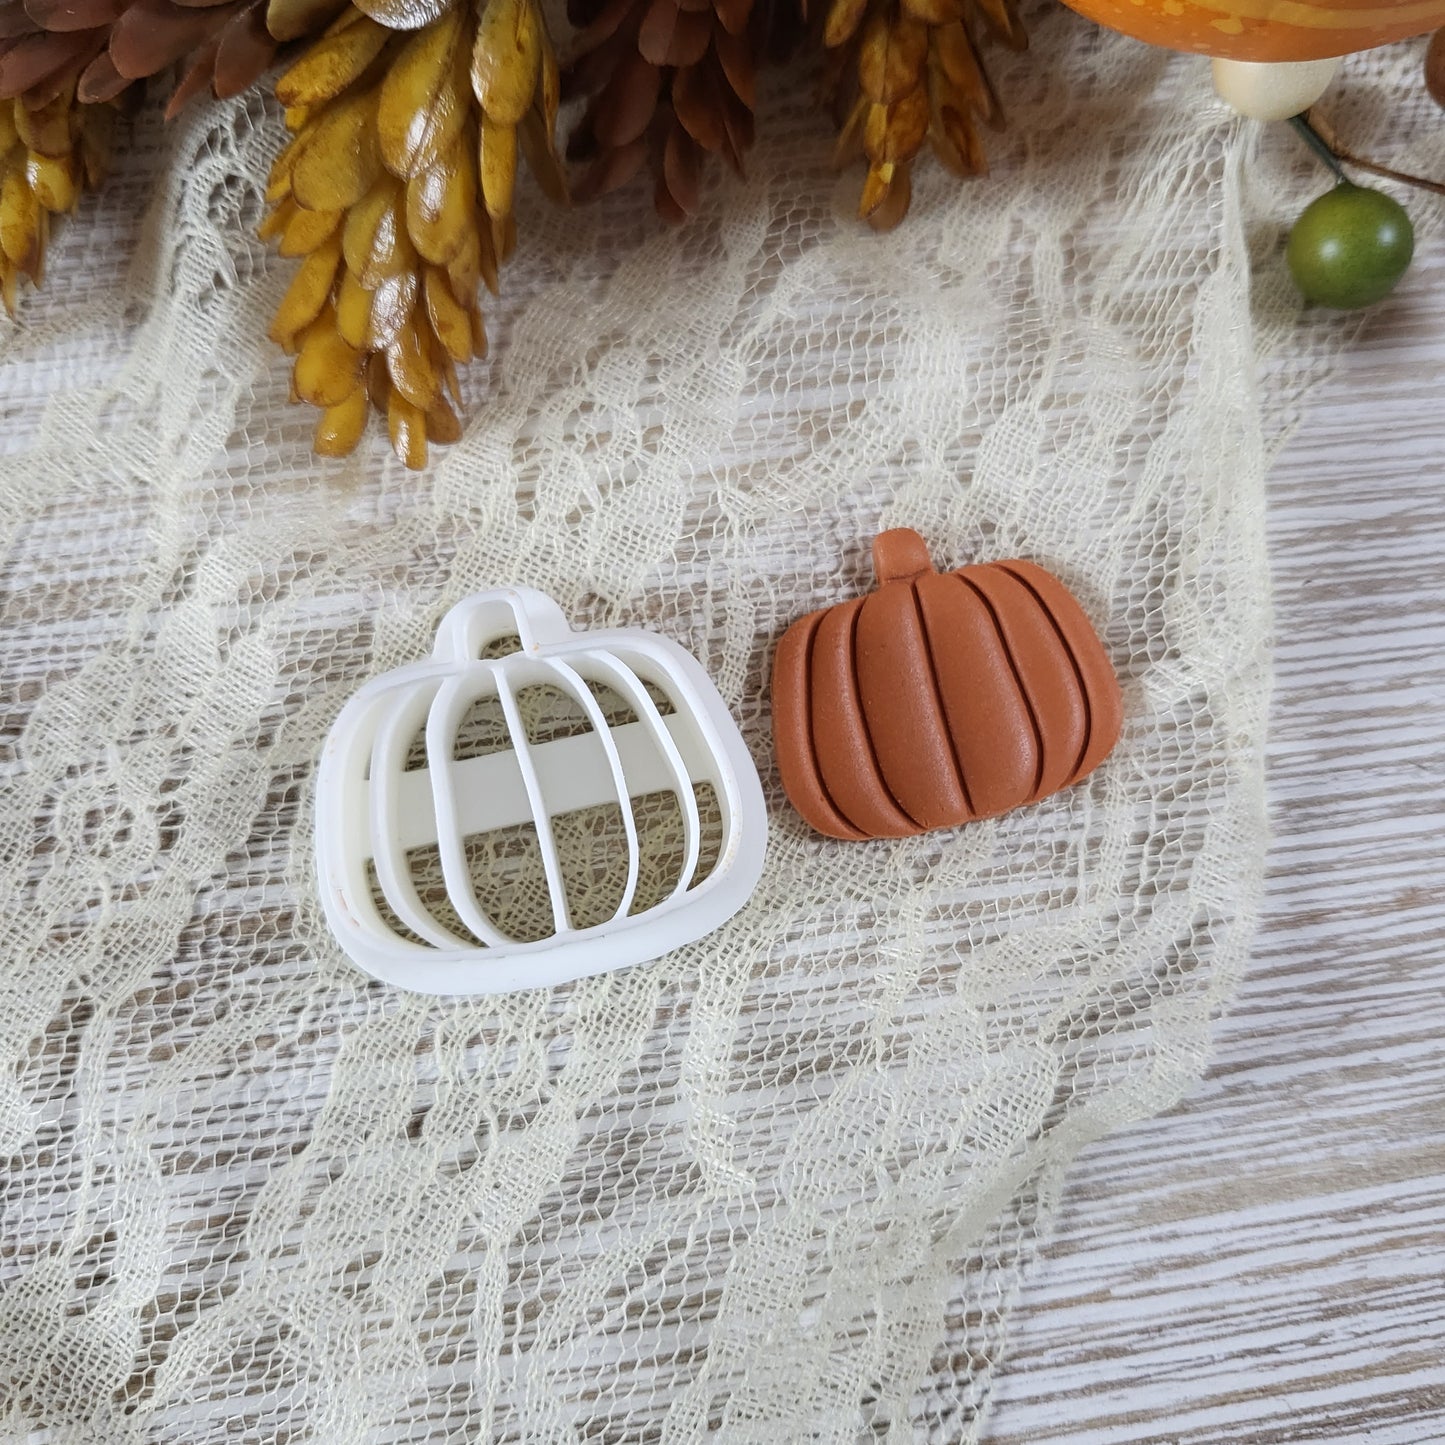 Pumpkin 2 Imprinted Clay Cutter